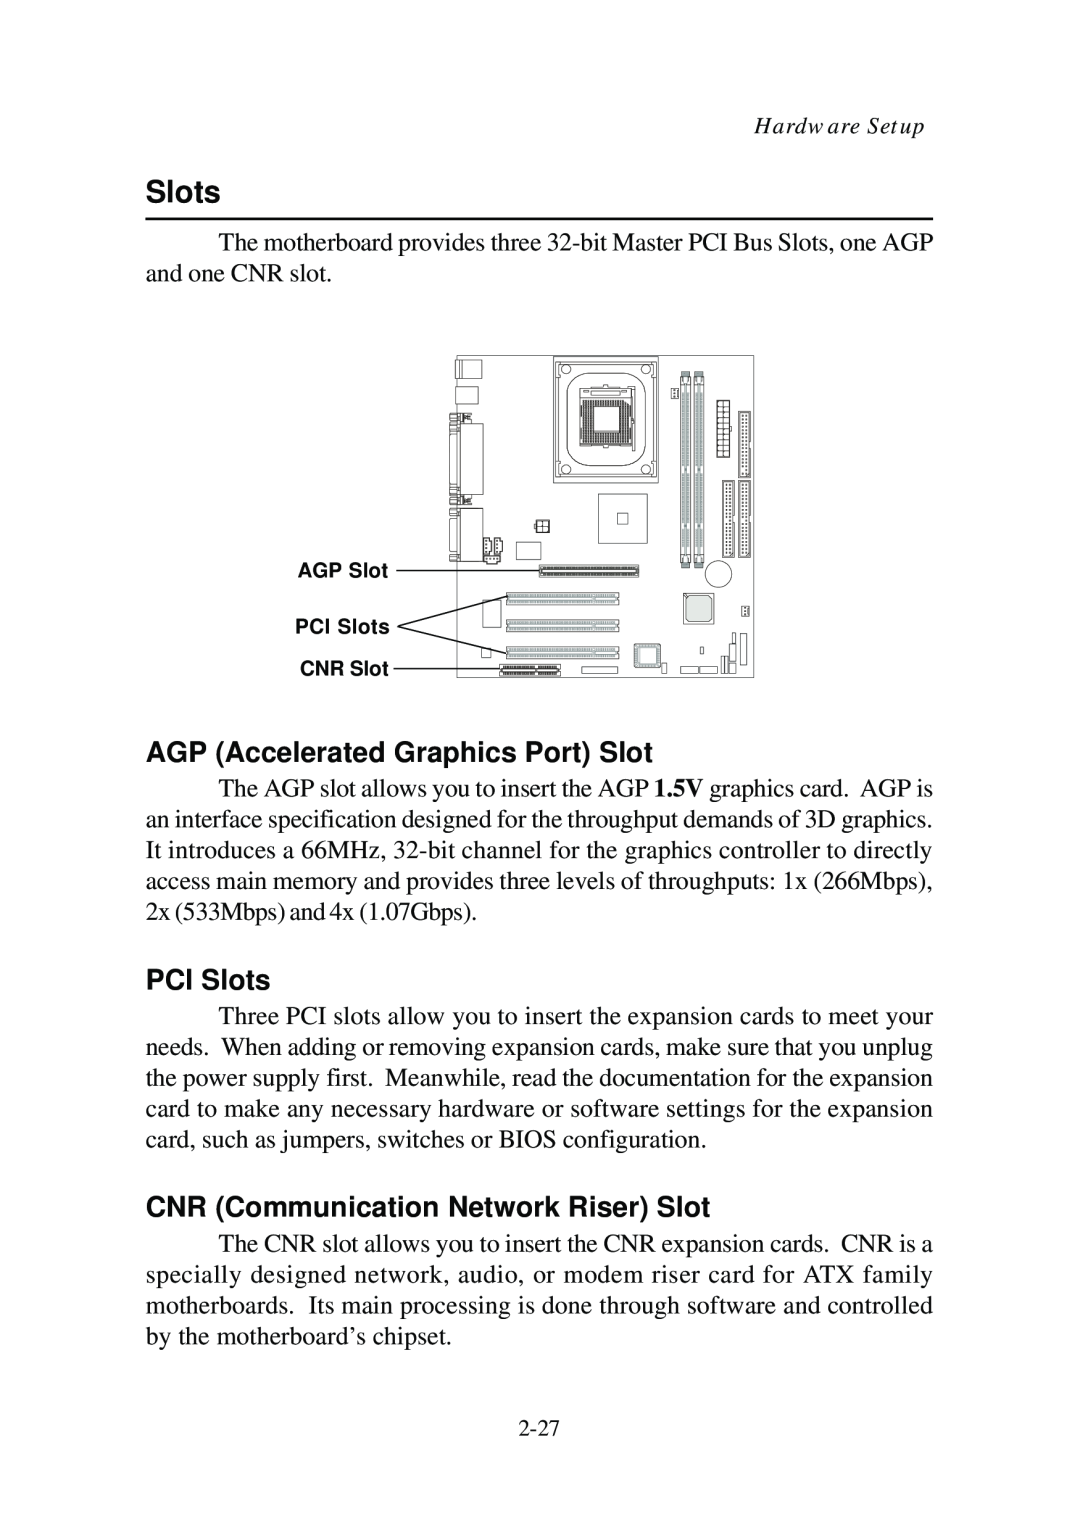 Premio Computer Aries/Centella AGP Accelerated Graphics Port Slot, PCI Slots, CNR Communication Network Riser Slot 